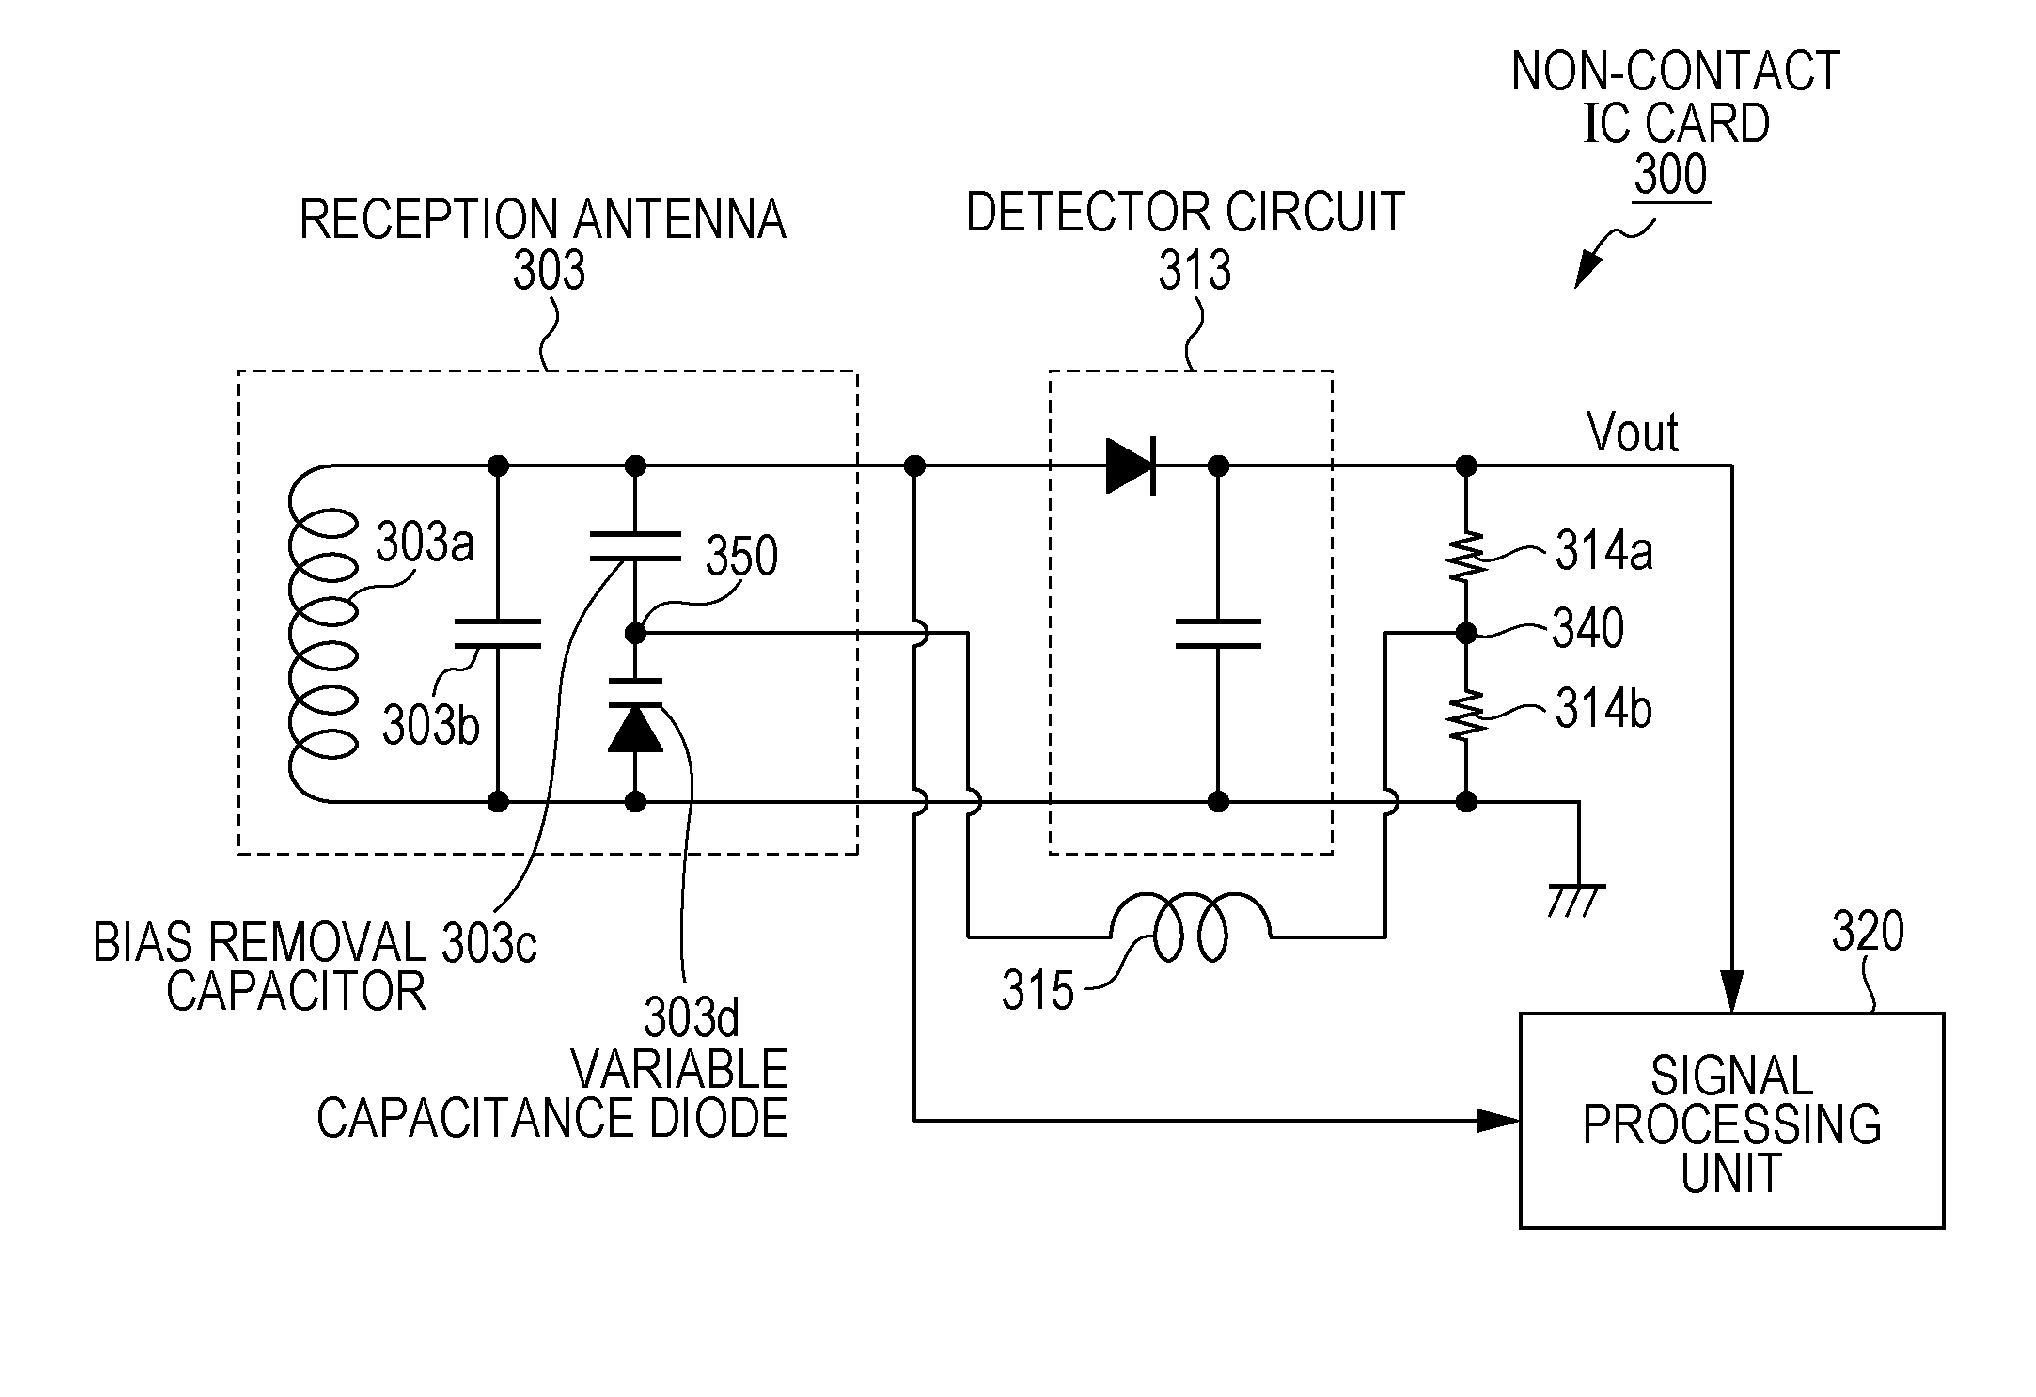 Capacitance device and resonance circuit